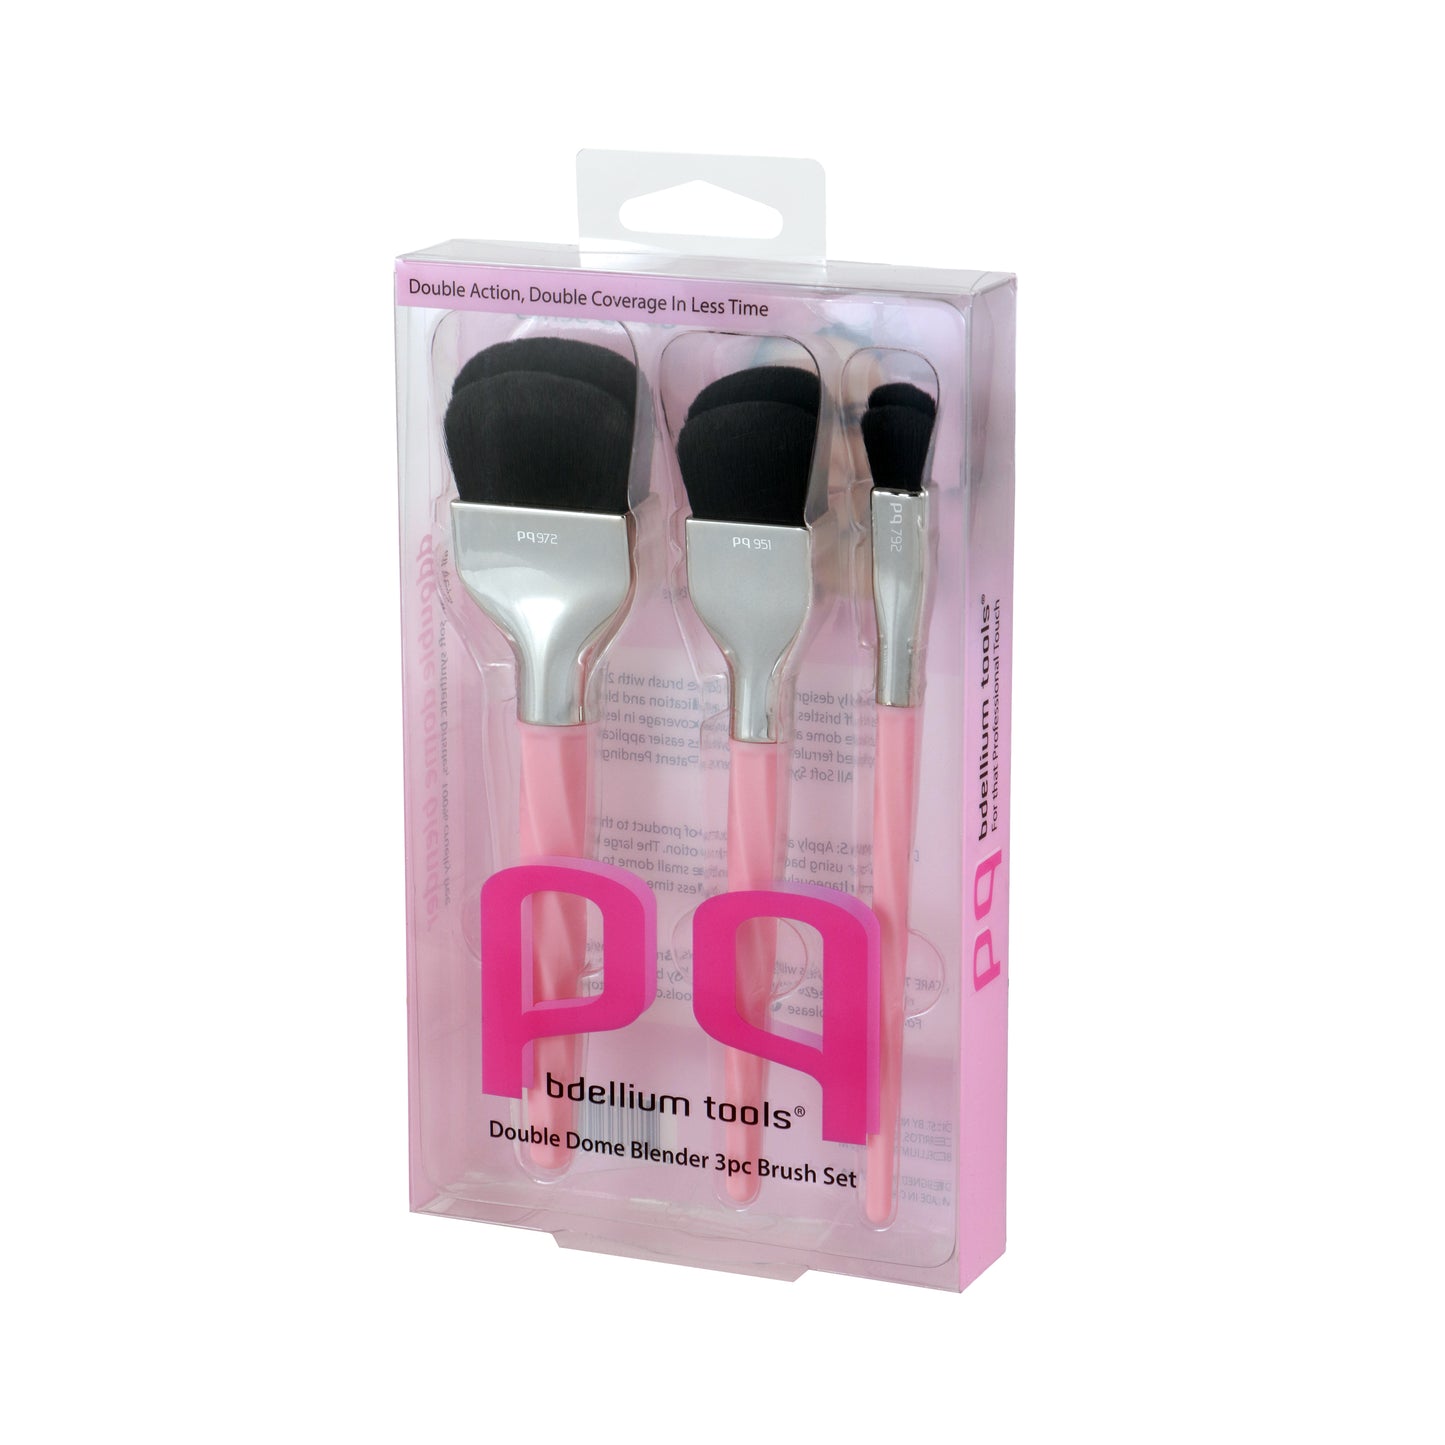 BDellium Tools Professional Makeup Brush Double Dome Blender 3pc Brush Set